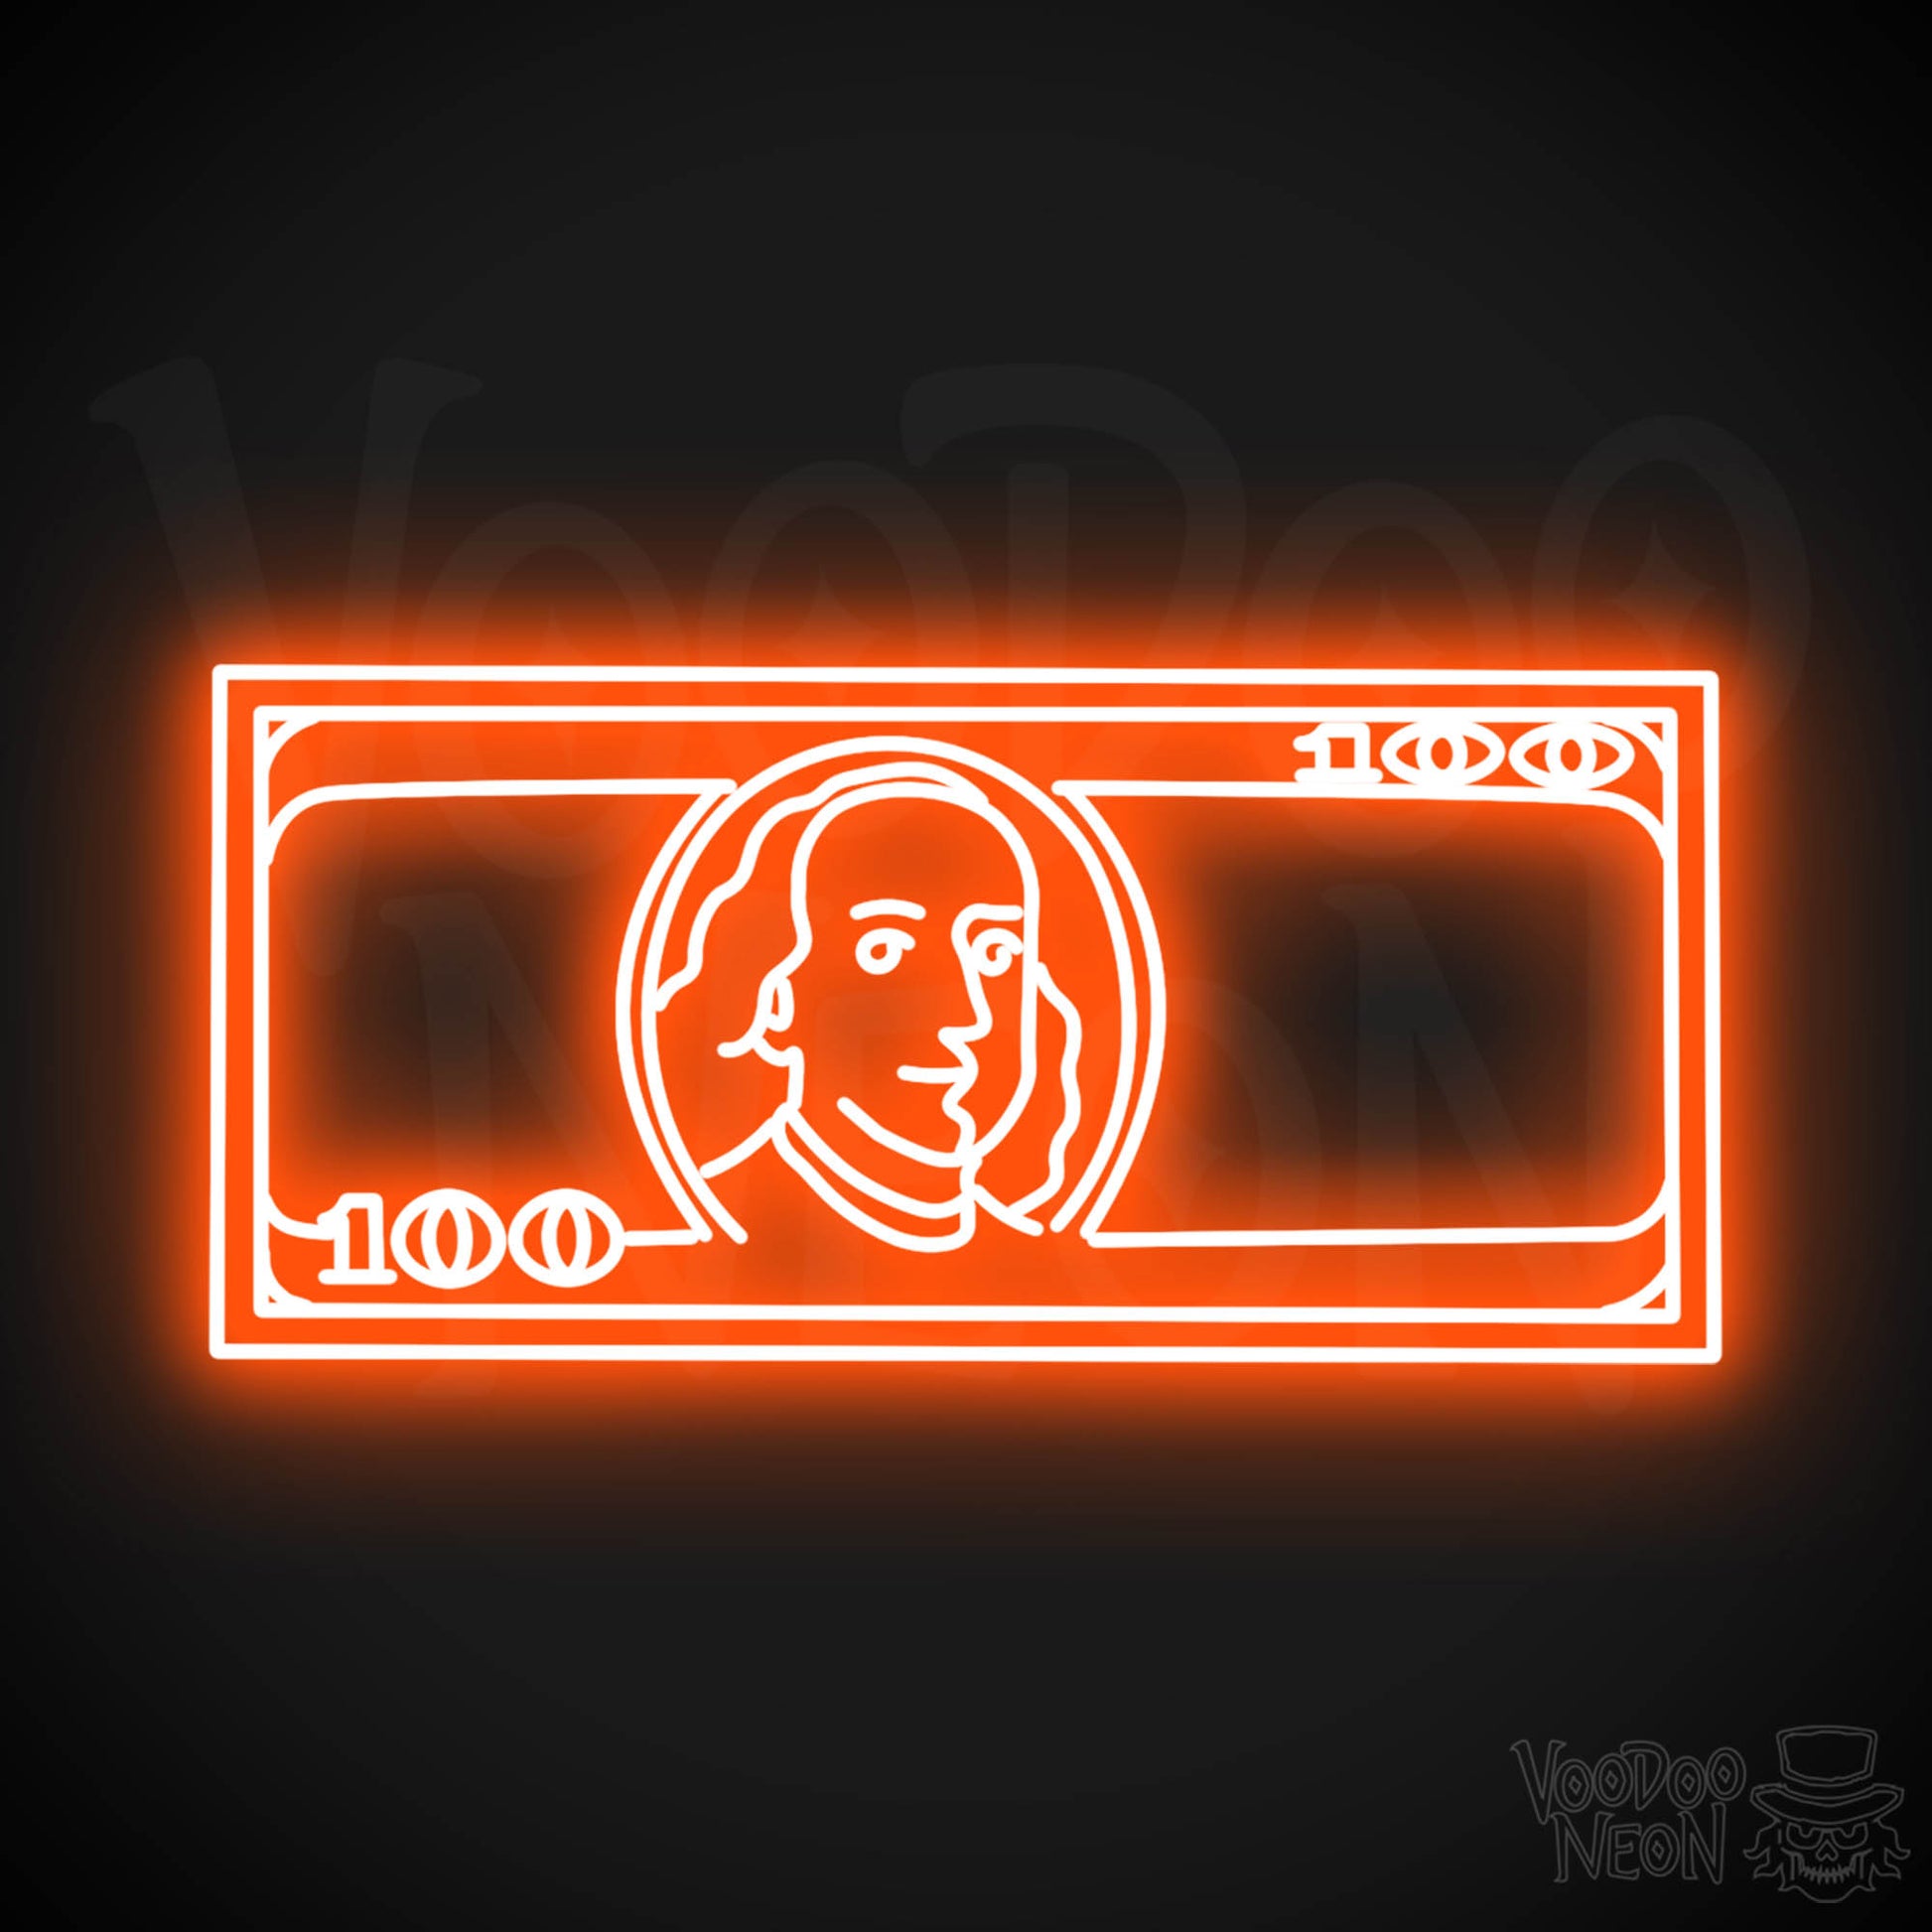 US $100 Bill Neon Sign - Neon $100 Sign - Color Orange